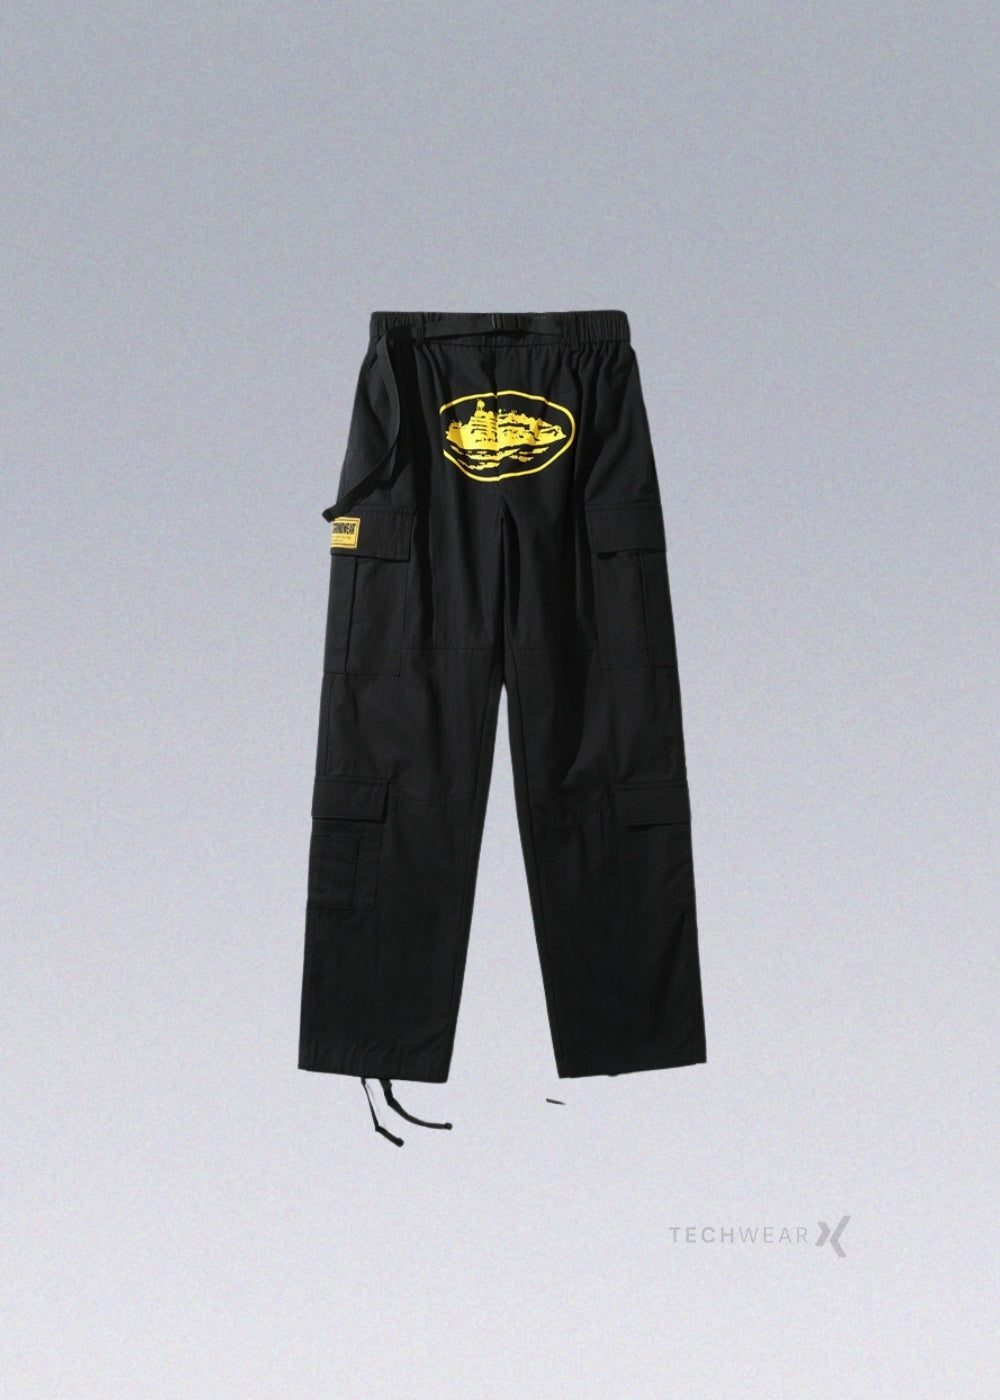 Buy SSoShHub Women/Girl Cotton Regular Fit 6 Pocket Cargo Pants